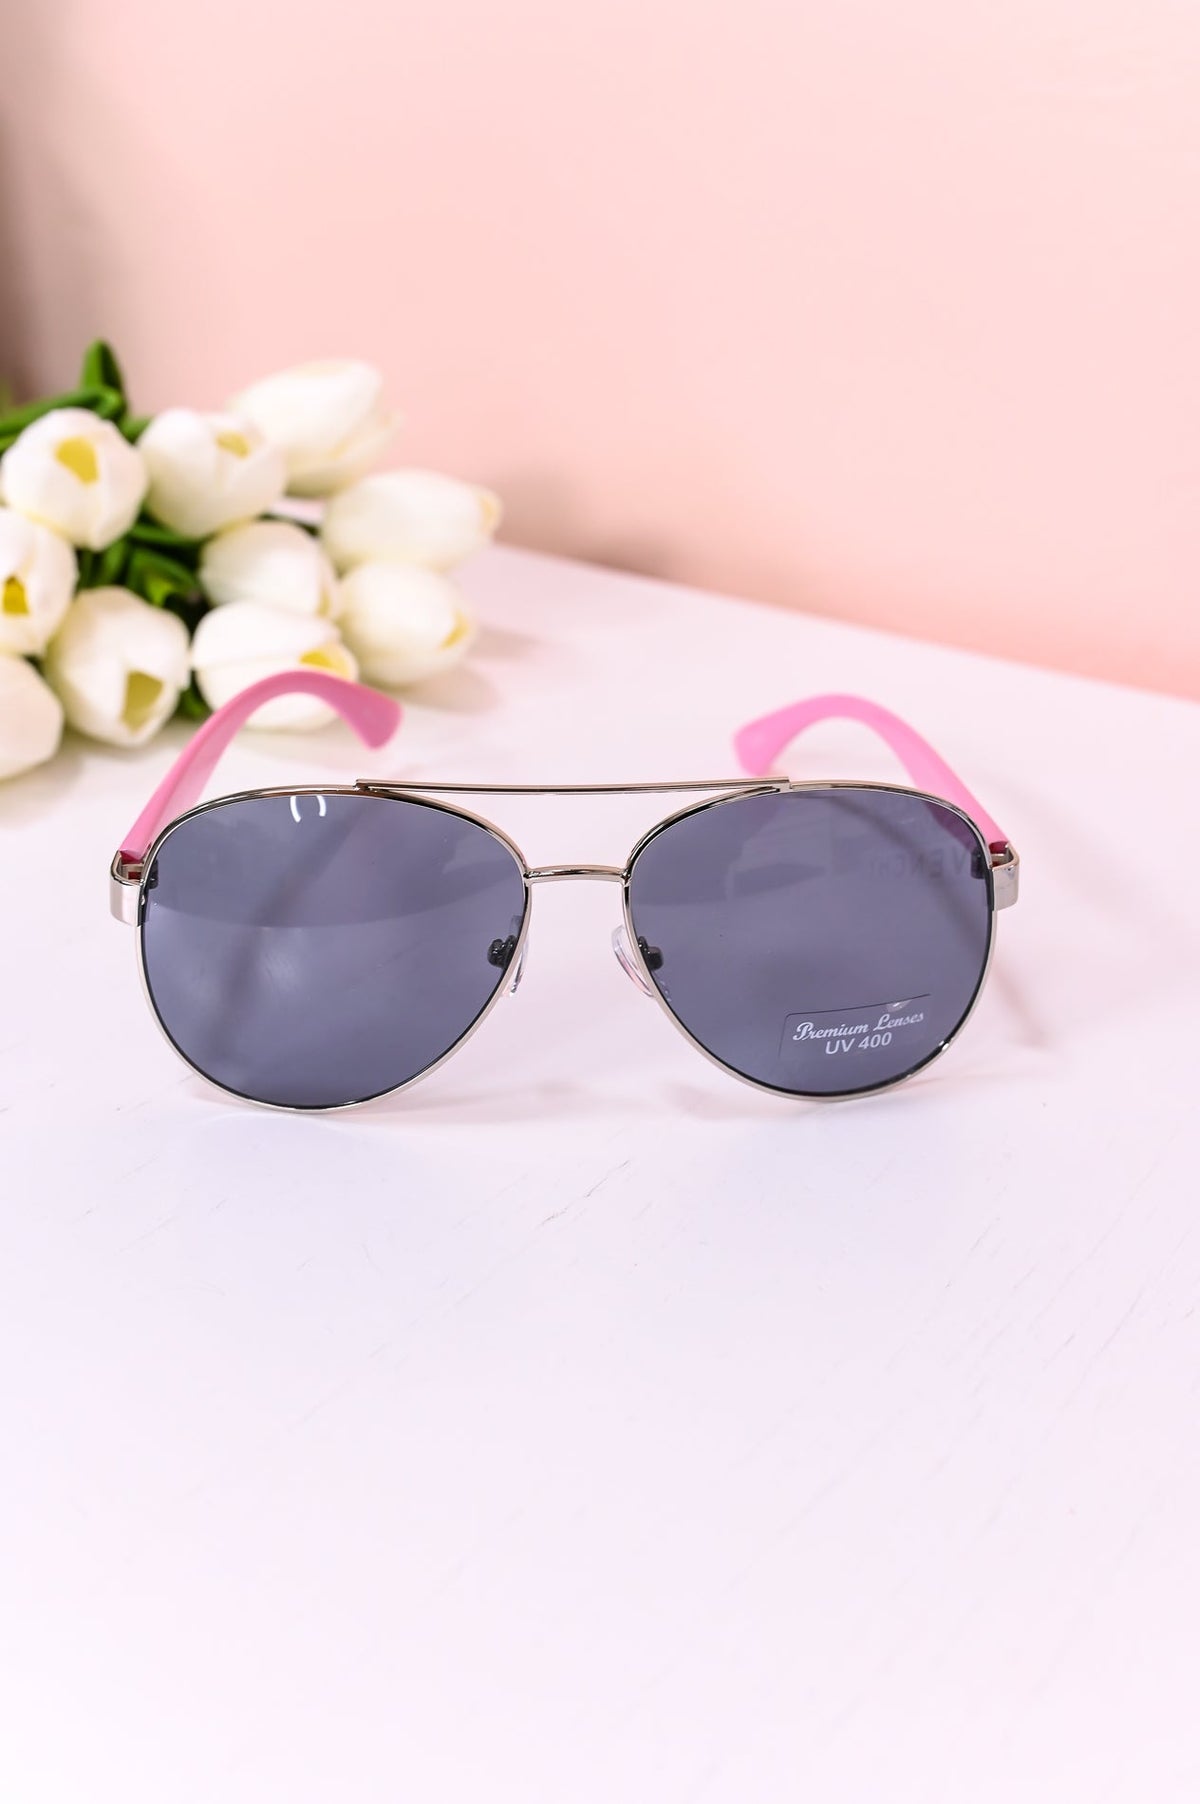 Pink Aviators Lens Sunglasses - SGL332PK